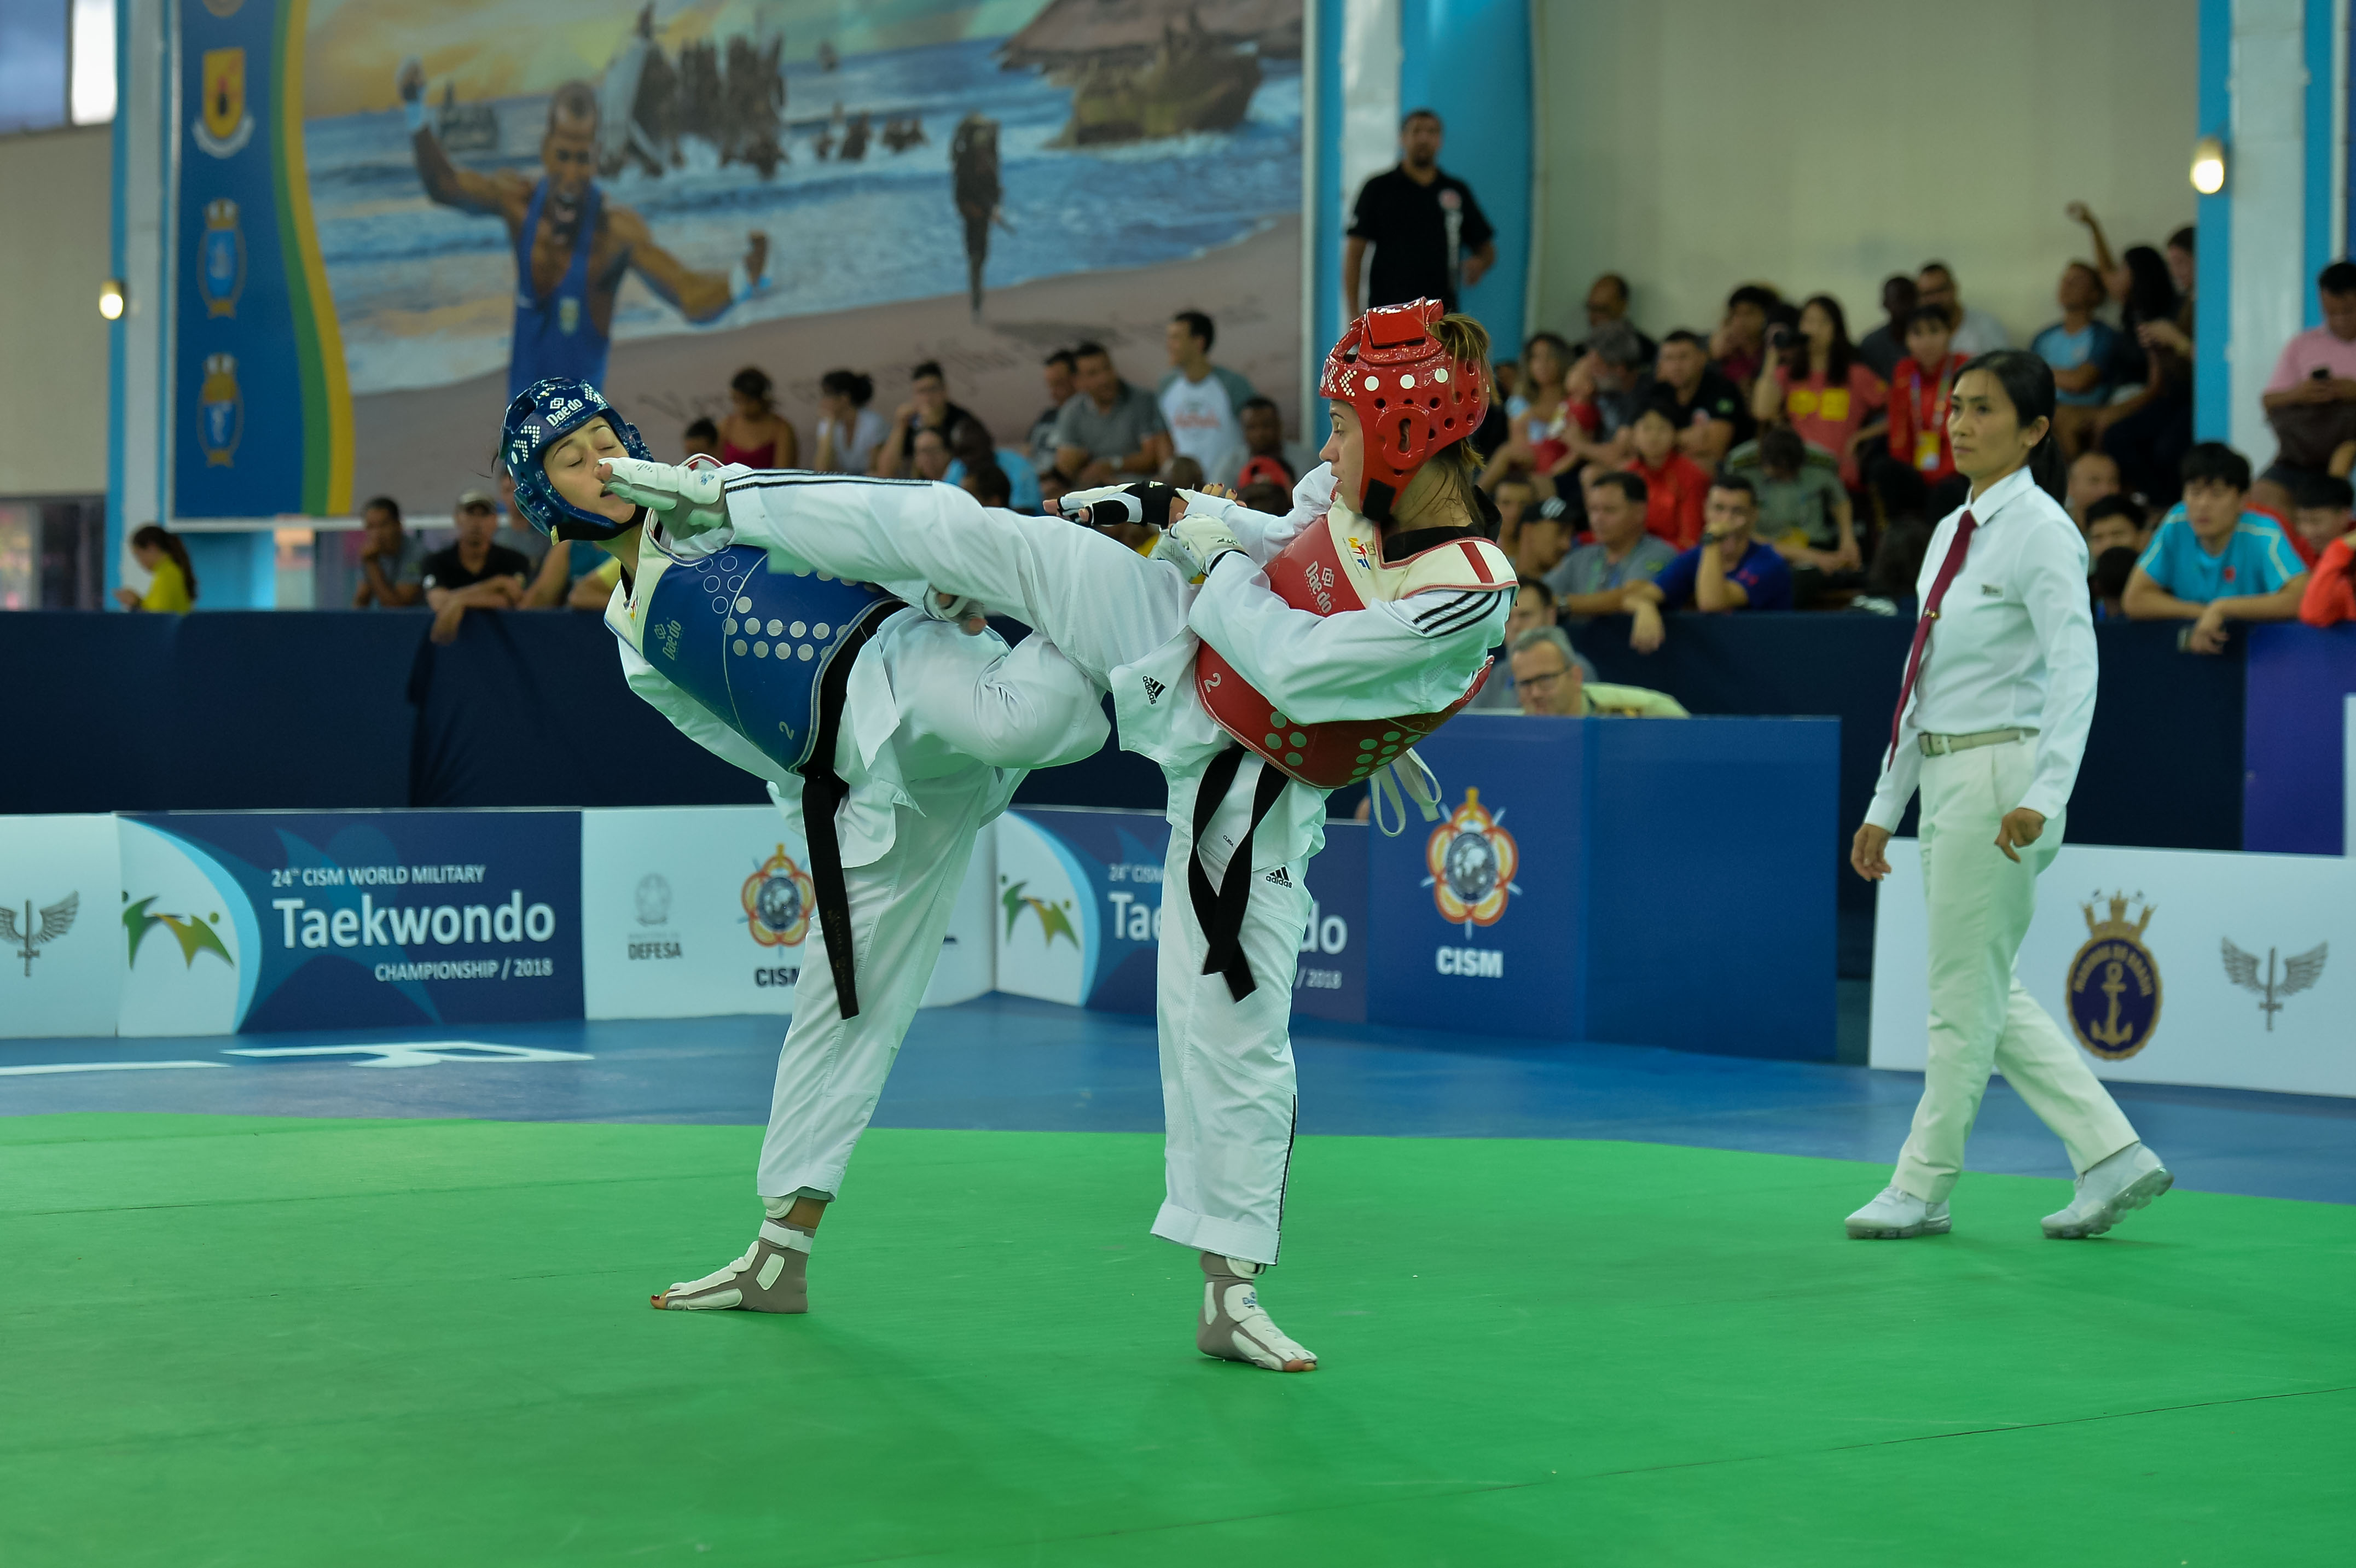 Campeonatos Taekwondo Karate